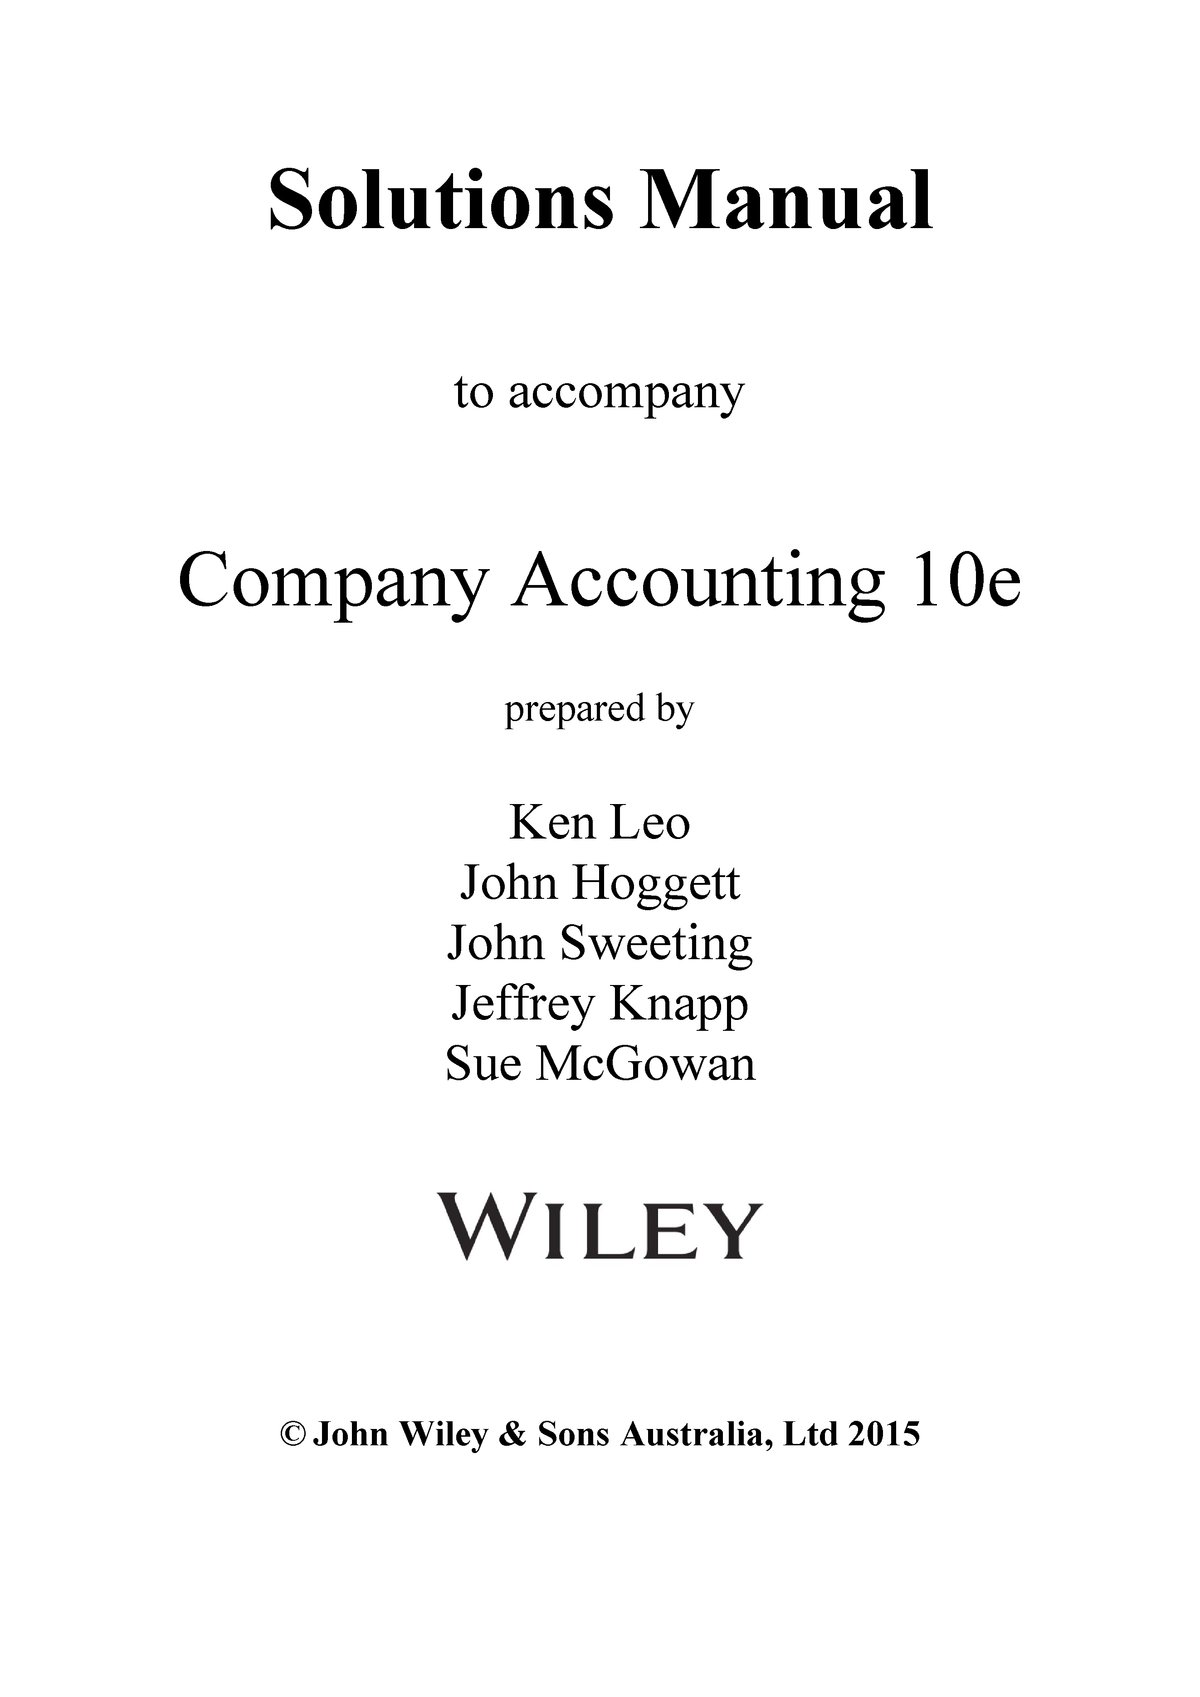 Book solution Accounting", Ken Leo; John Hoggett; John